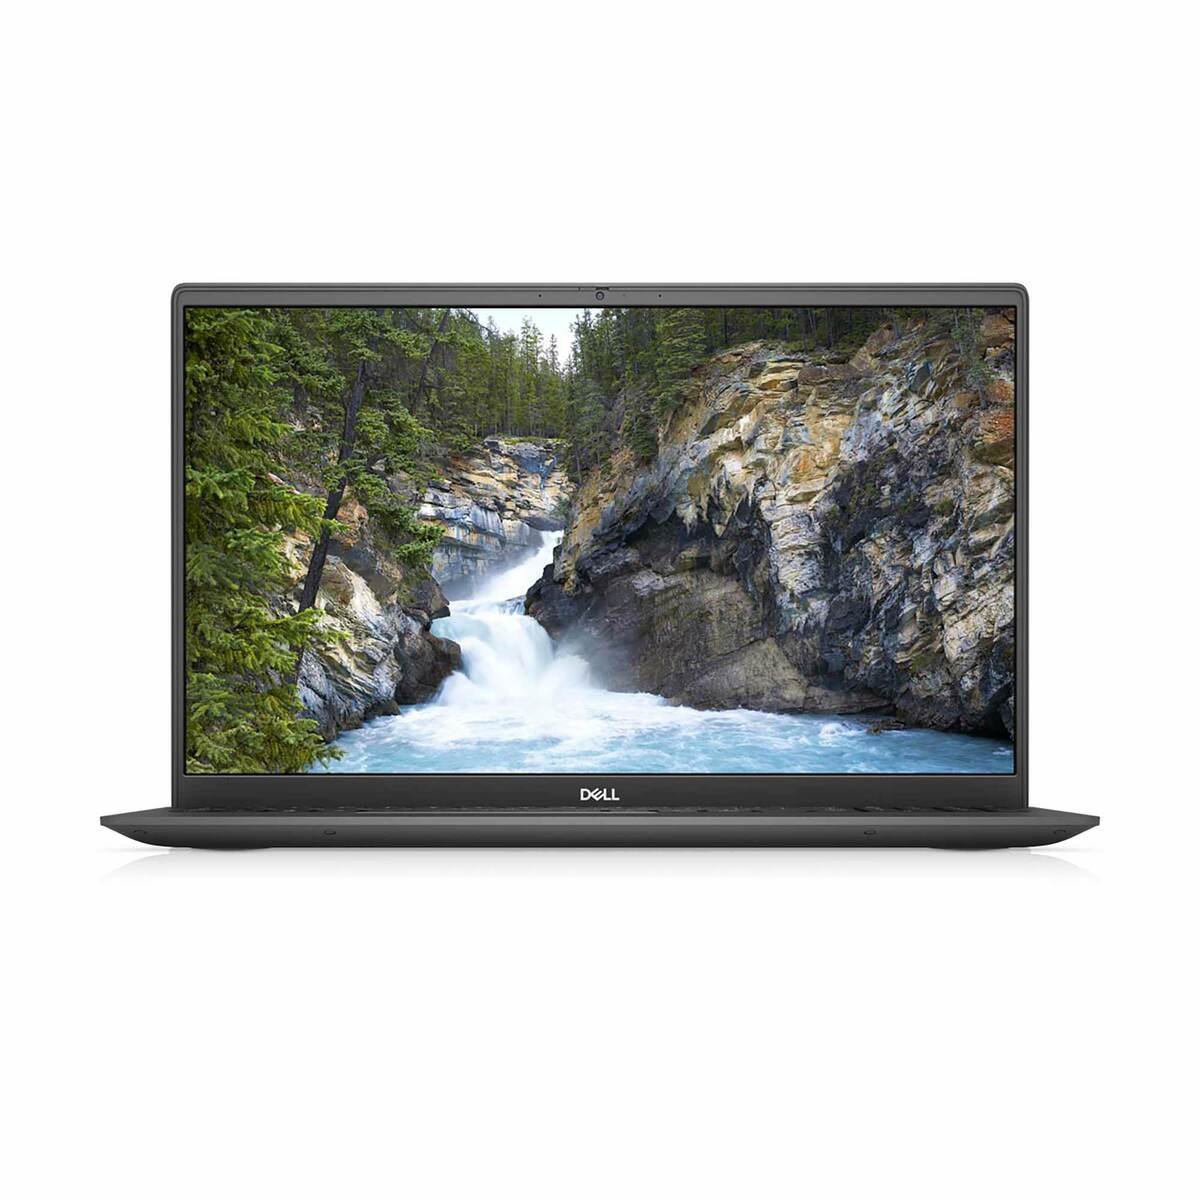 Dell Vostro 5501 (5501-VOS-6005-GRY) Laptop, Intel Core i5-1035G1, 15.6" FHD, 8GB RAM, 1TB SSD, 2GB Graphics, Windows 10, Gray